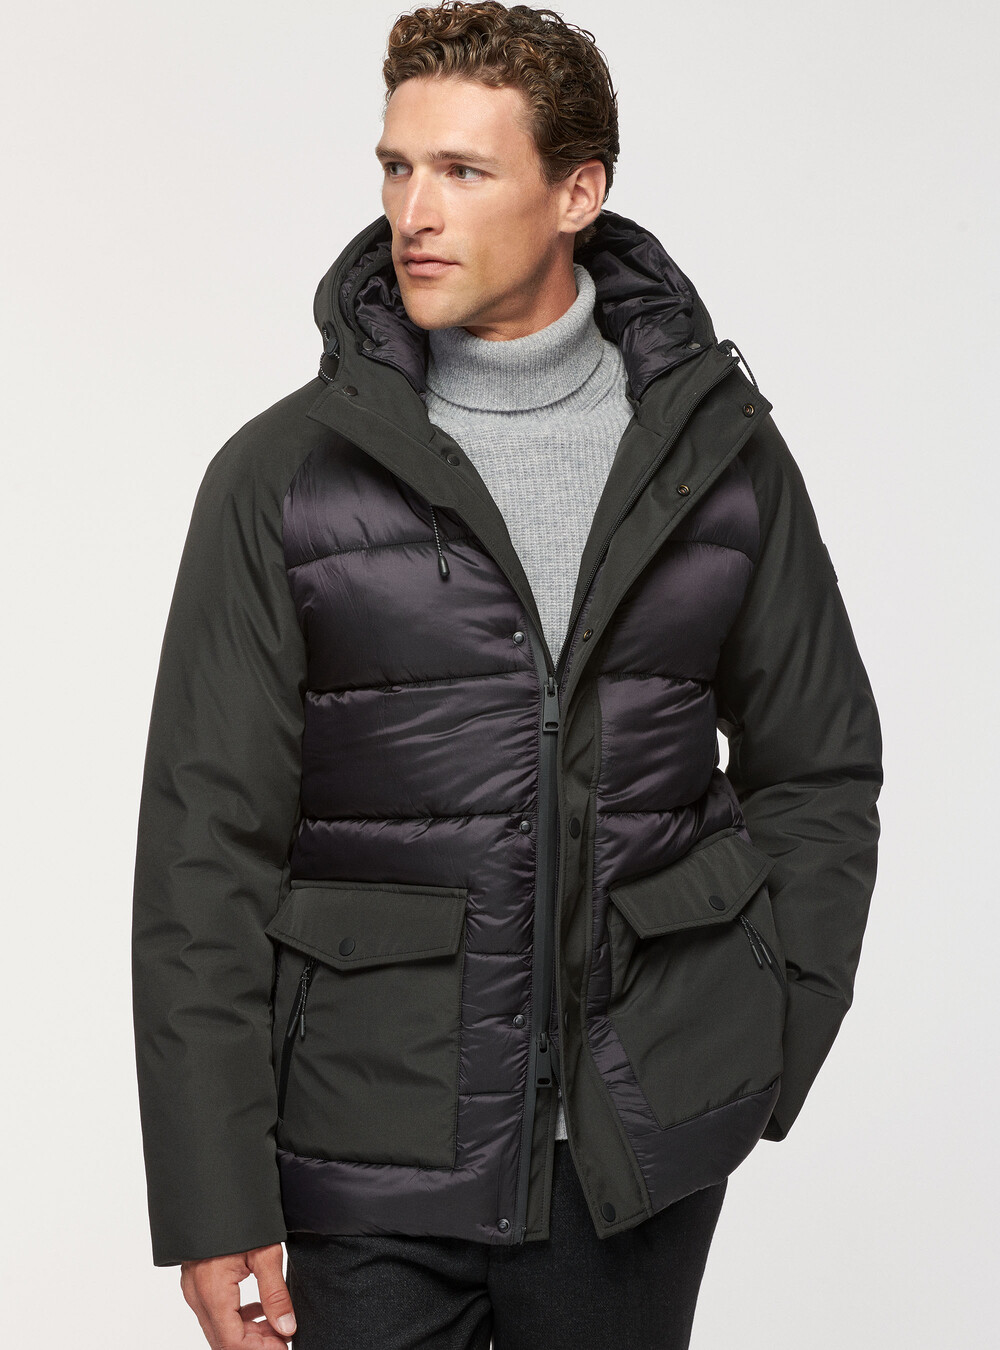 Padded technical jacket | GutteridgeUS | Men's Jackets and Sleeveless